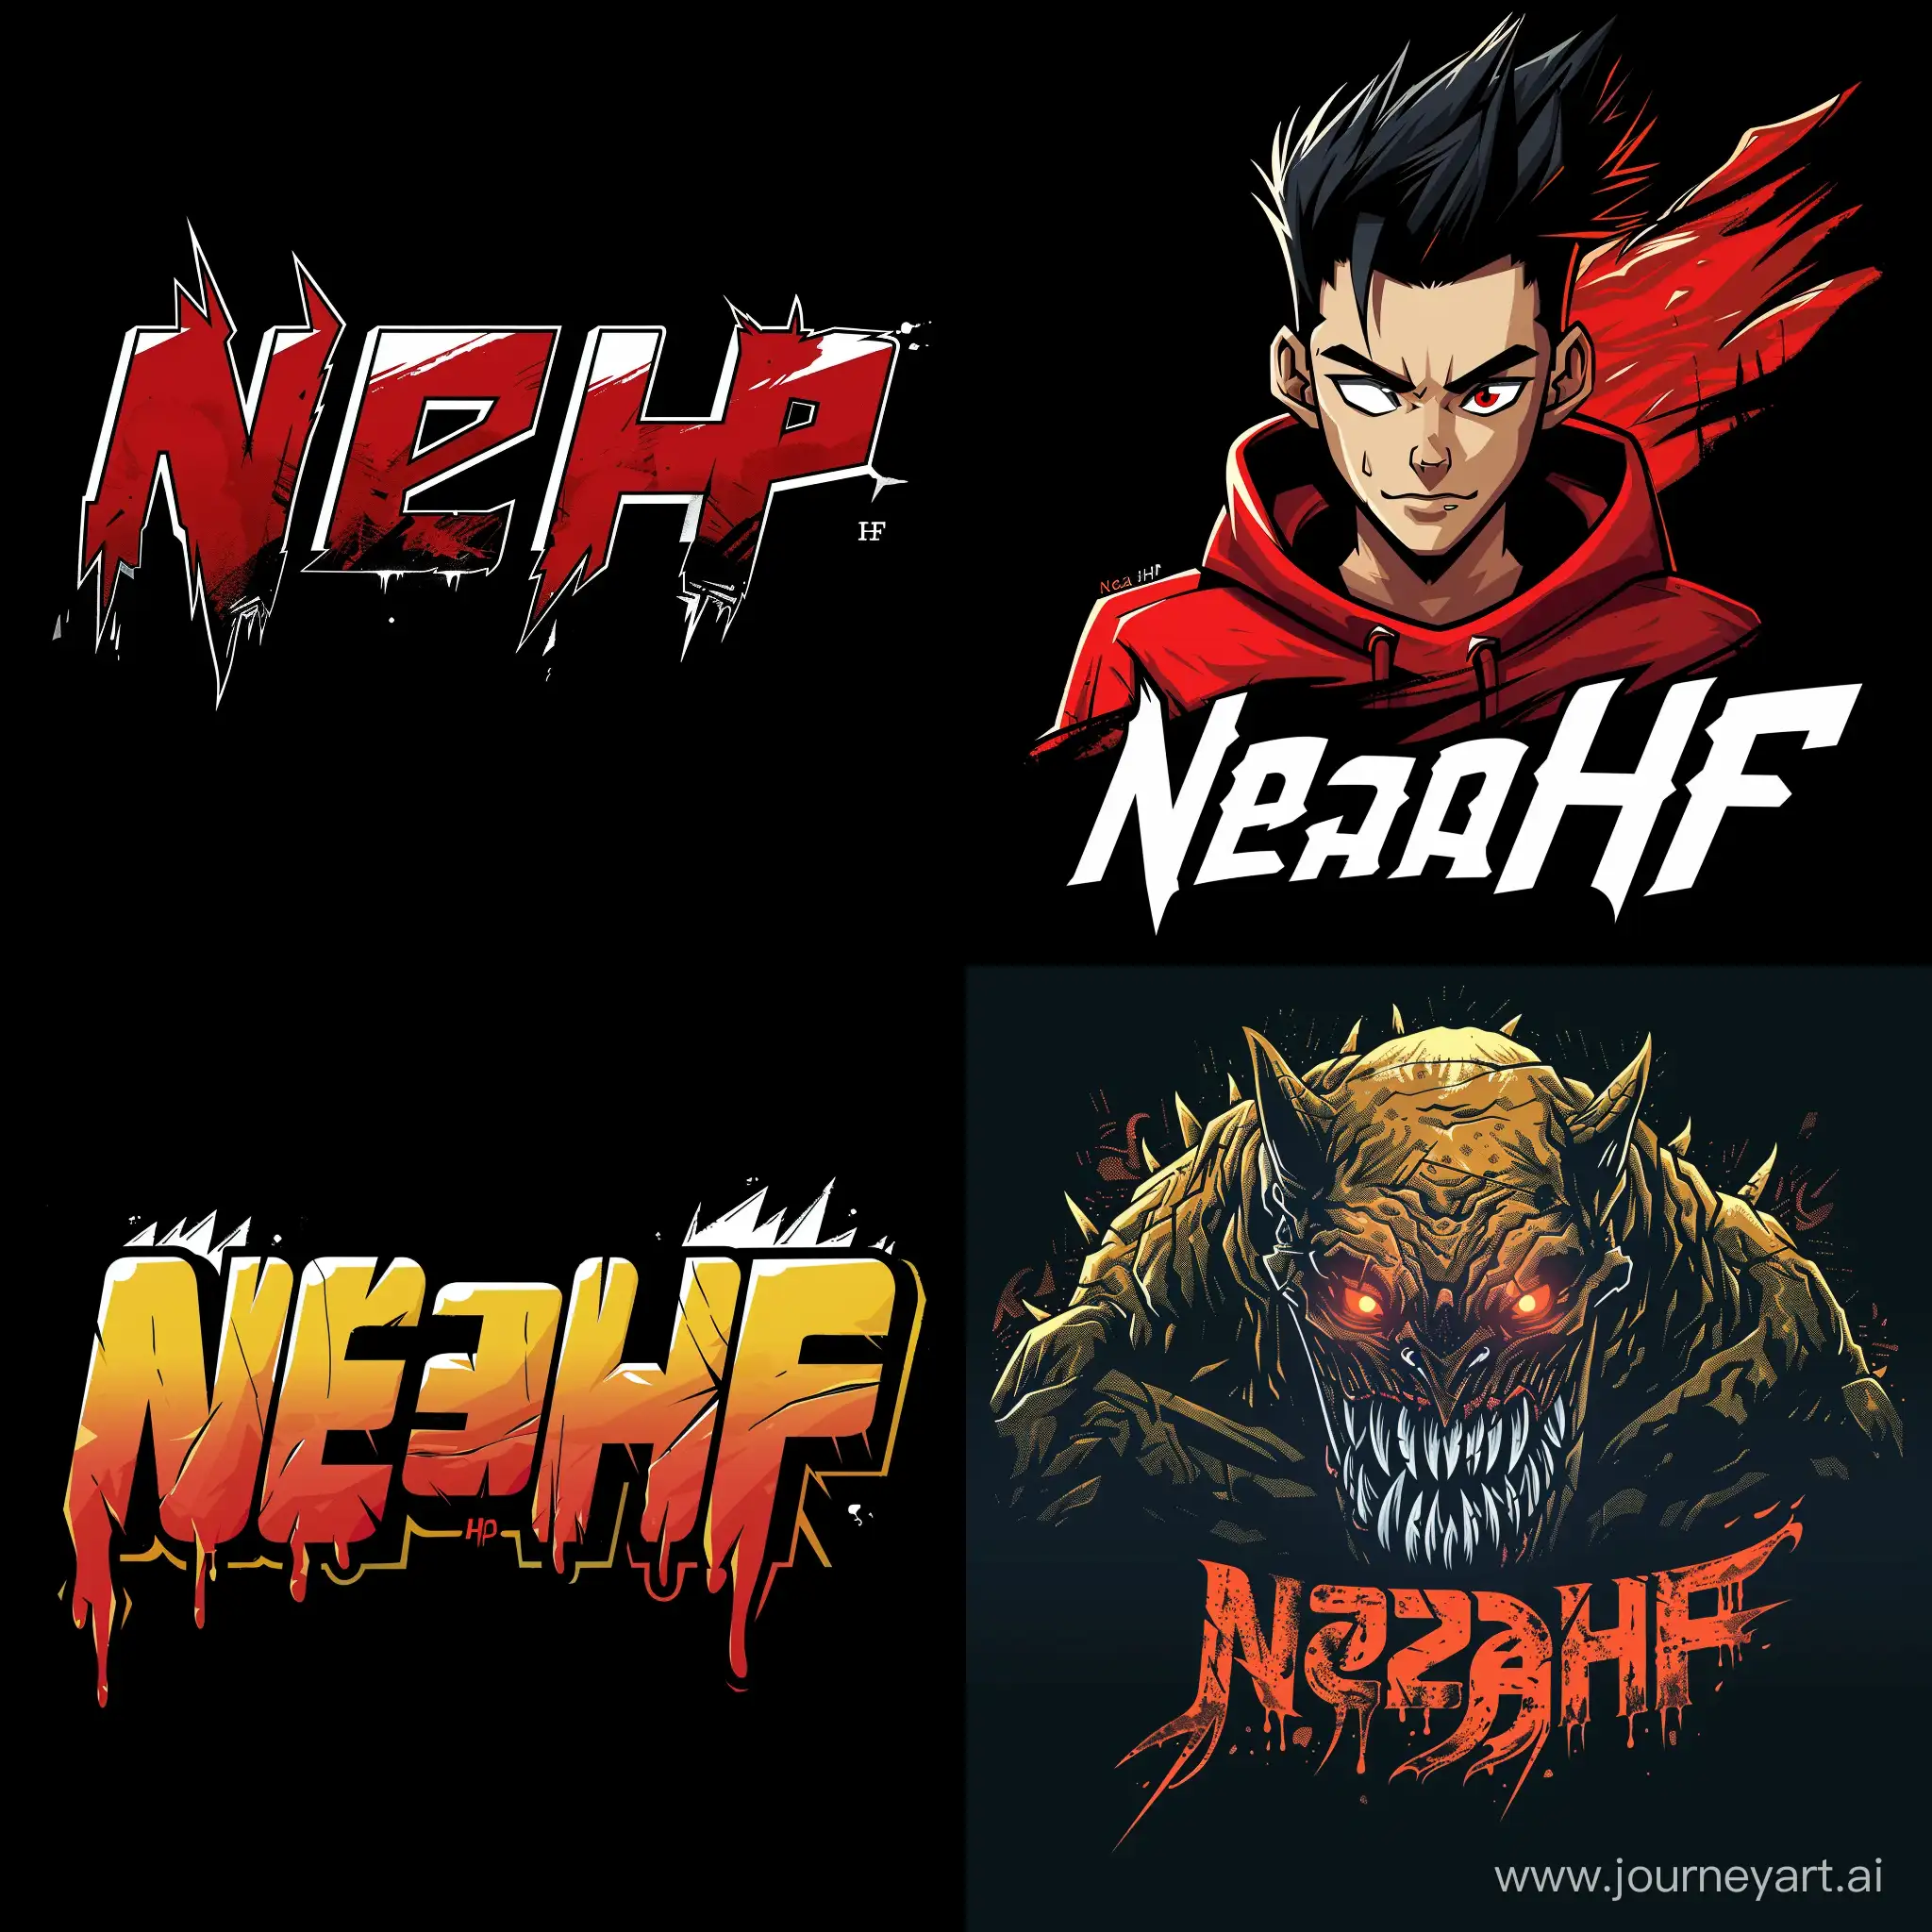 The text "NezaHF" as the comics logo